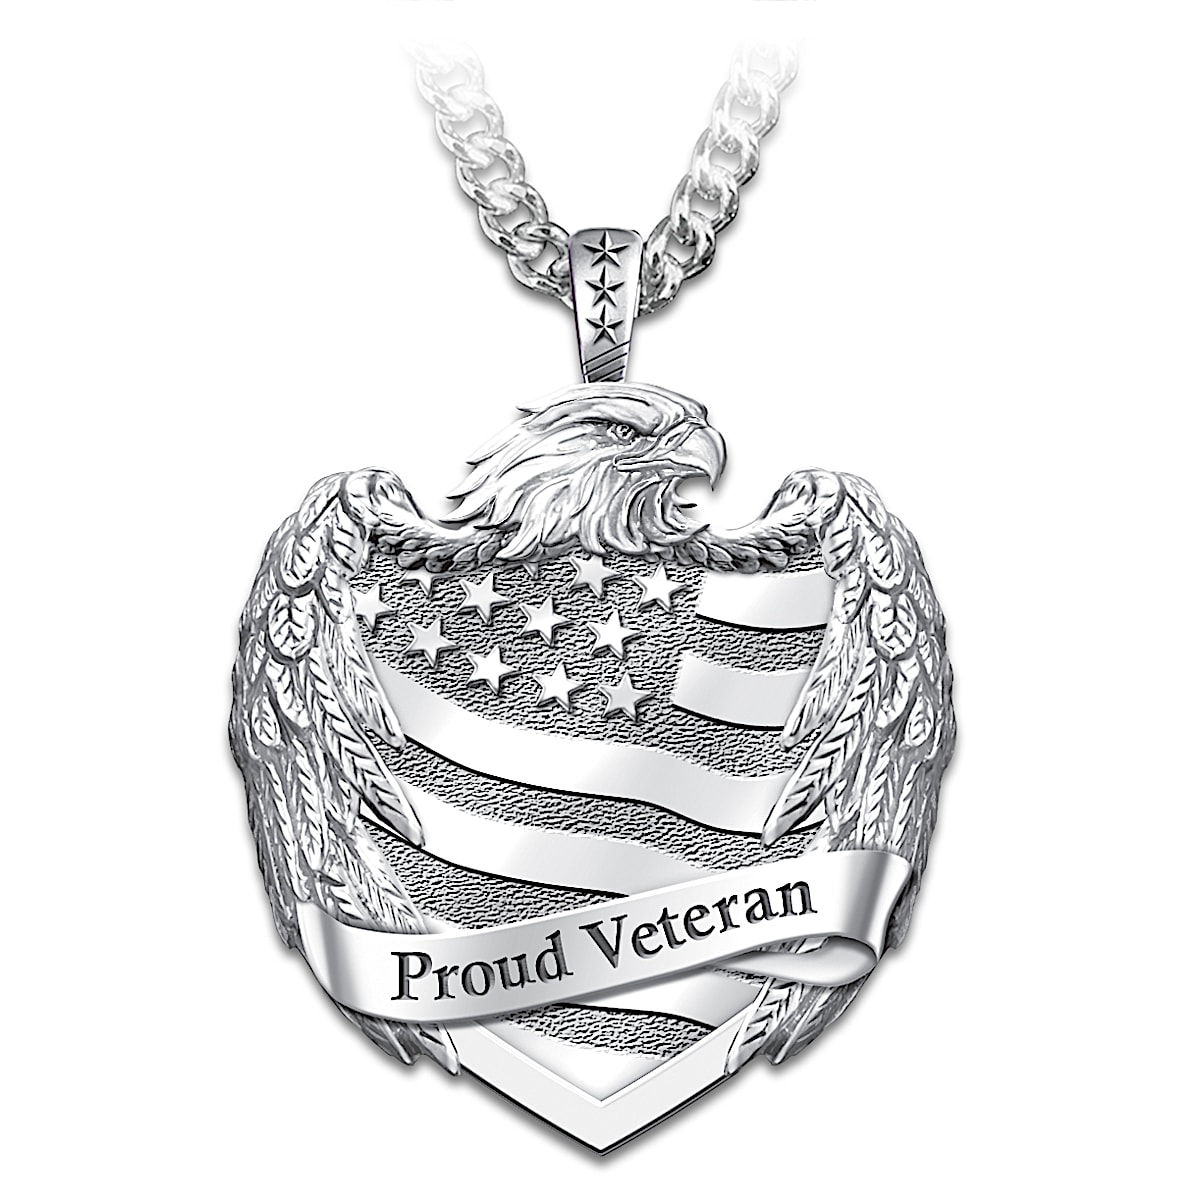 Proud Veteran Mens Stainless Steel Pendant Necklace